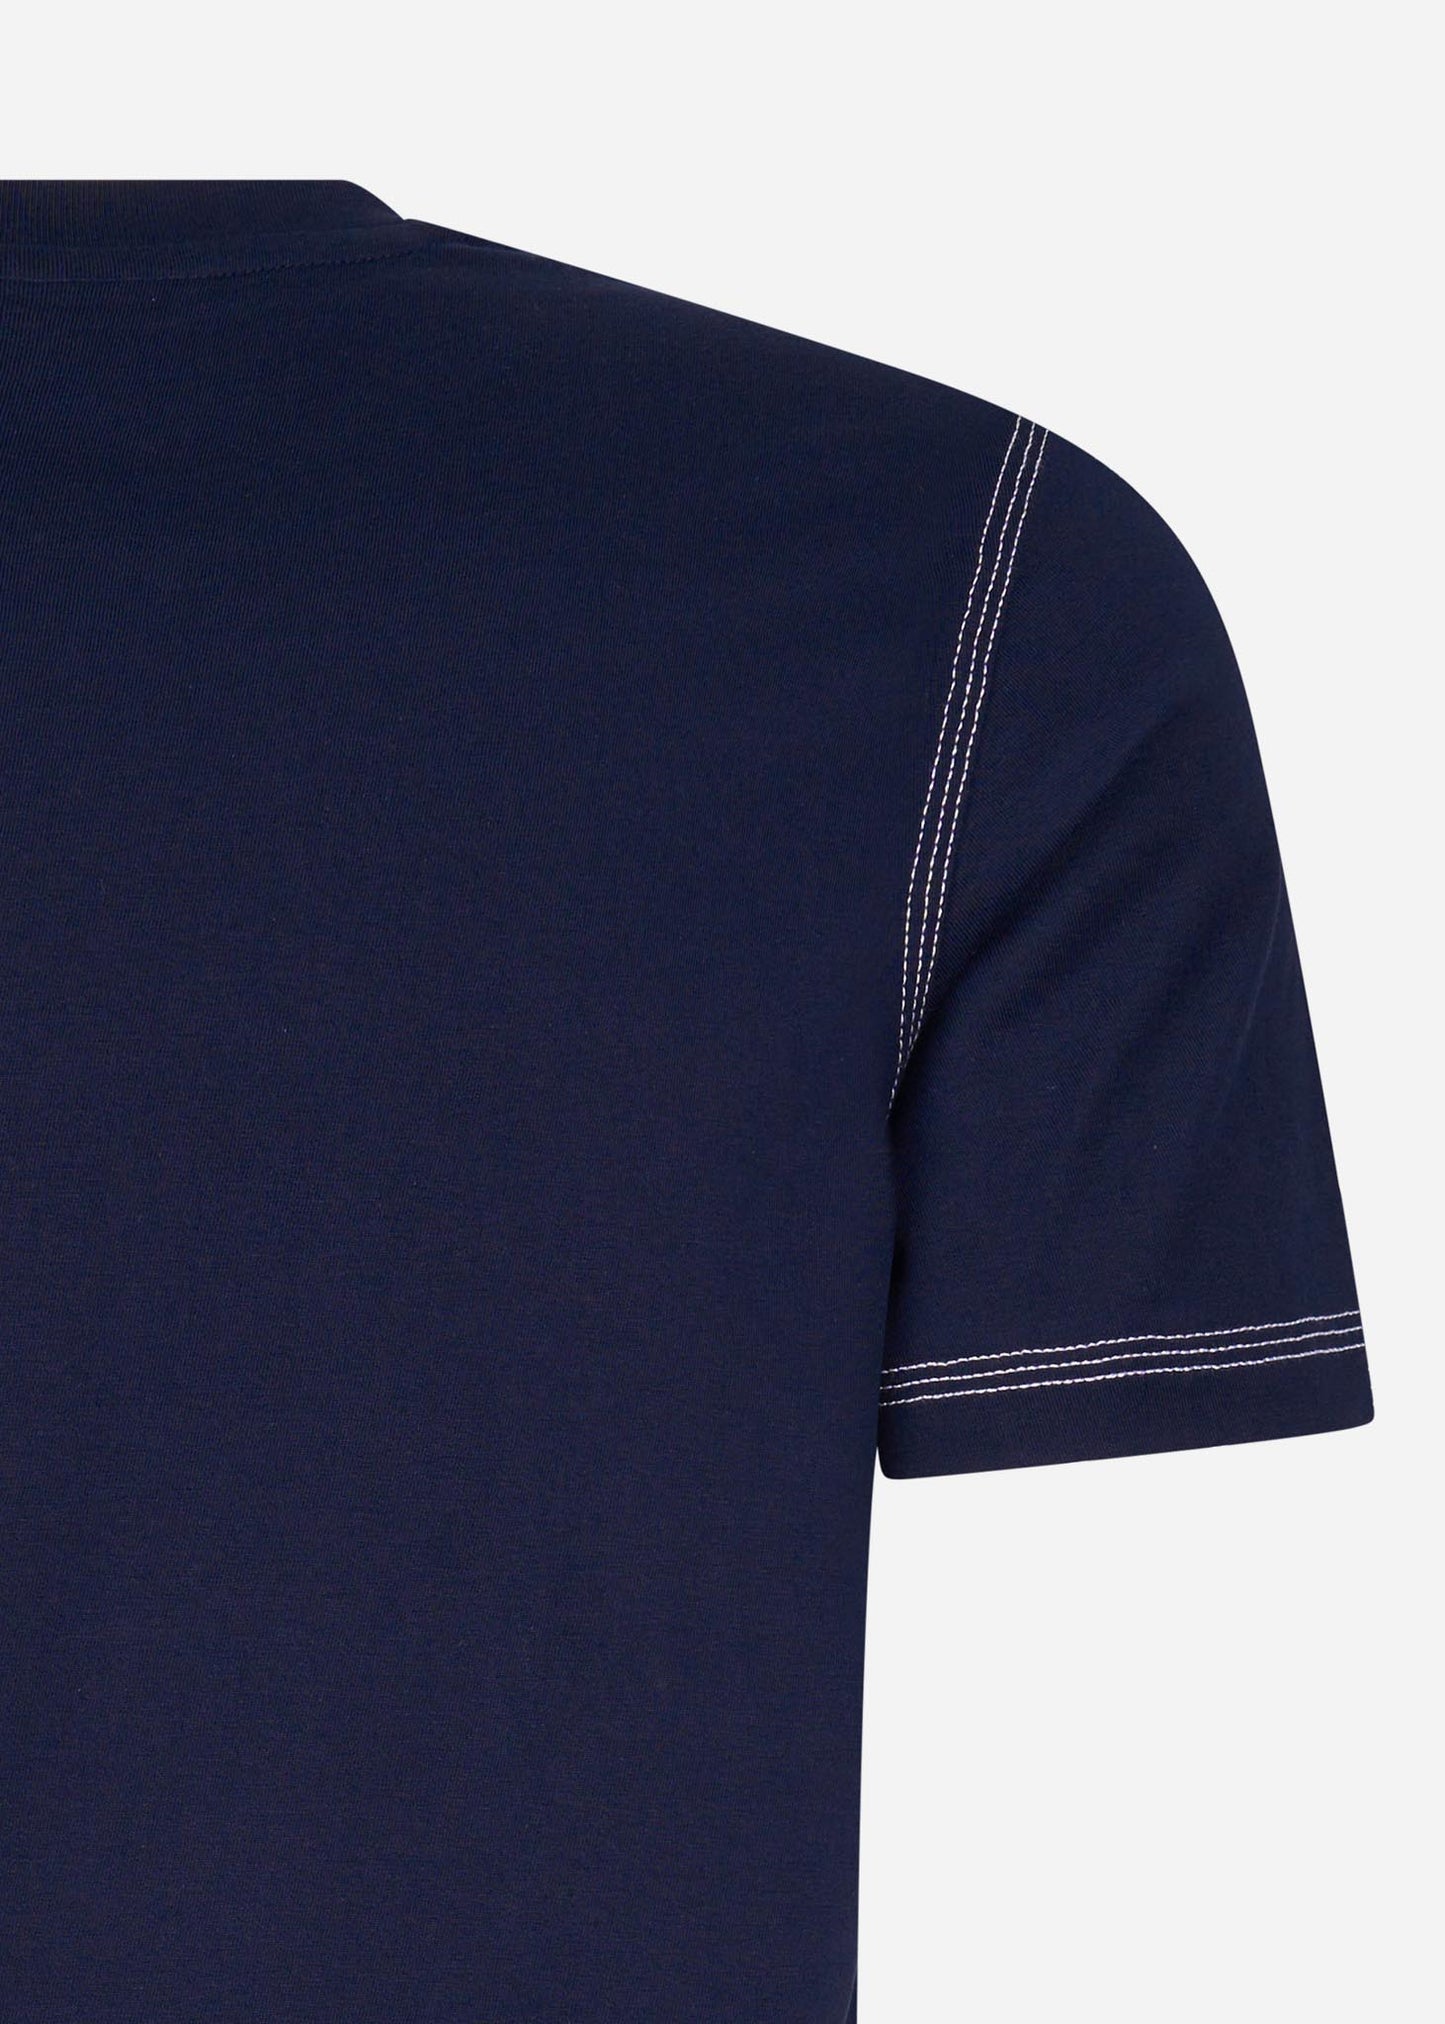 Club lacoste t-shirt - navy blue